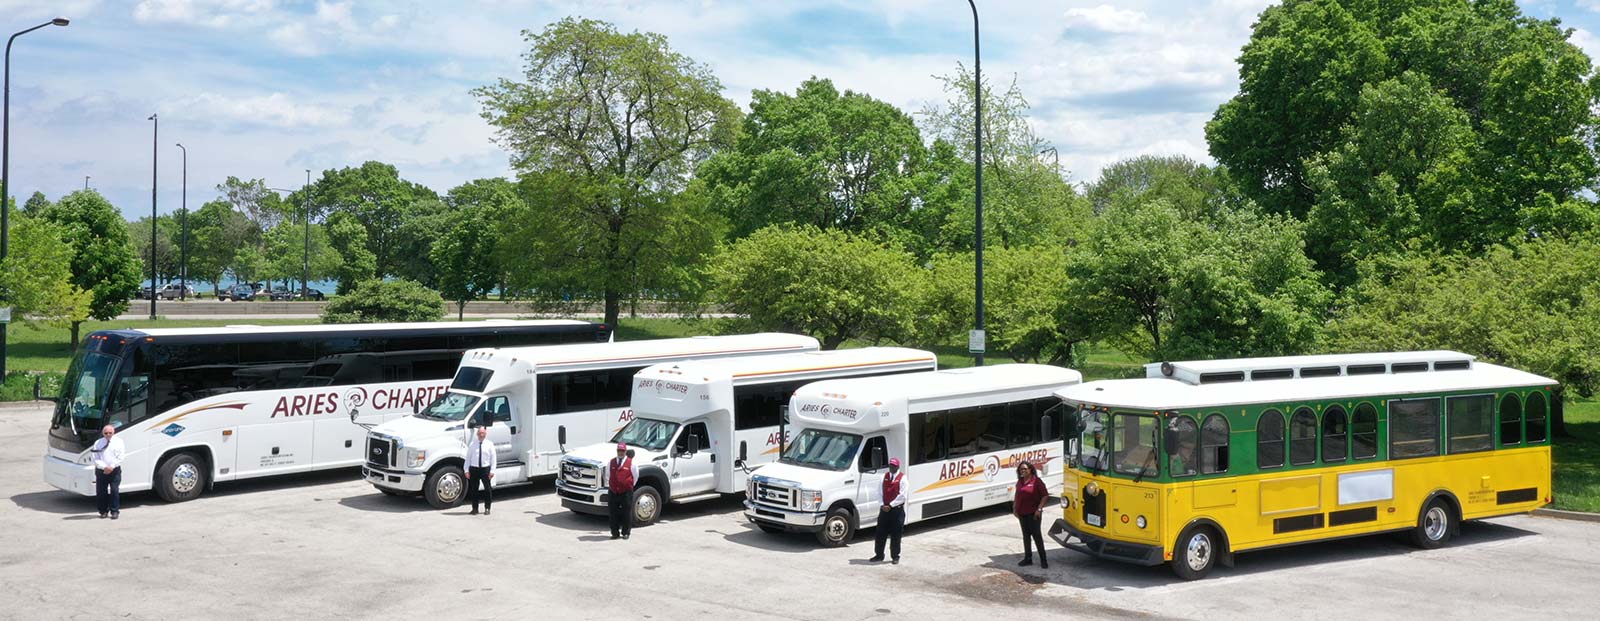 Chicago Charter Bus rentals